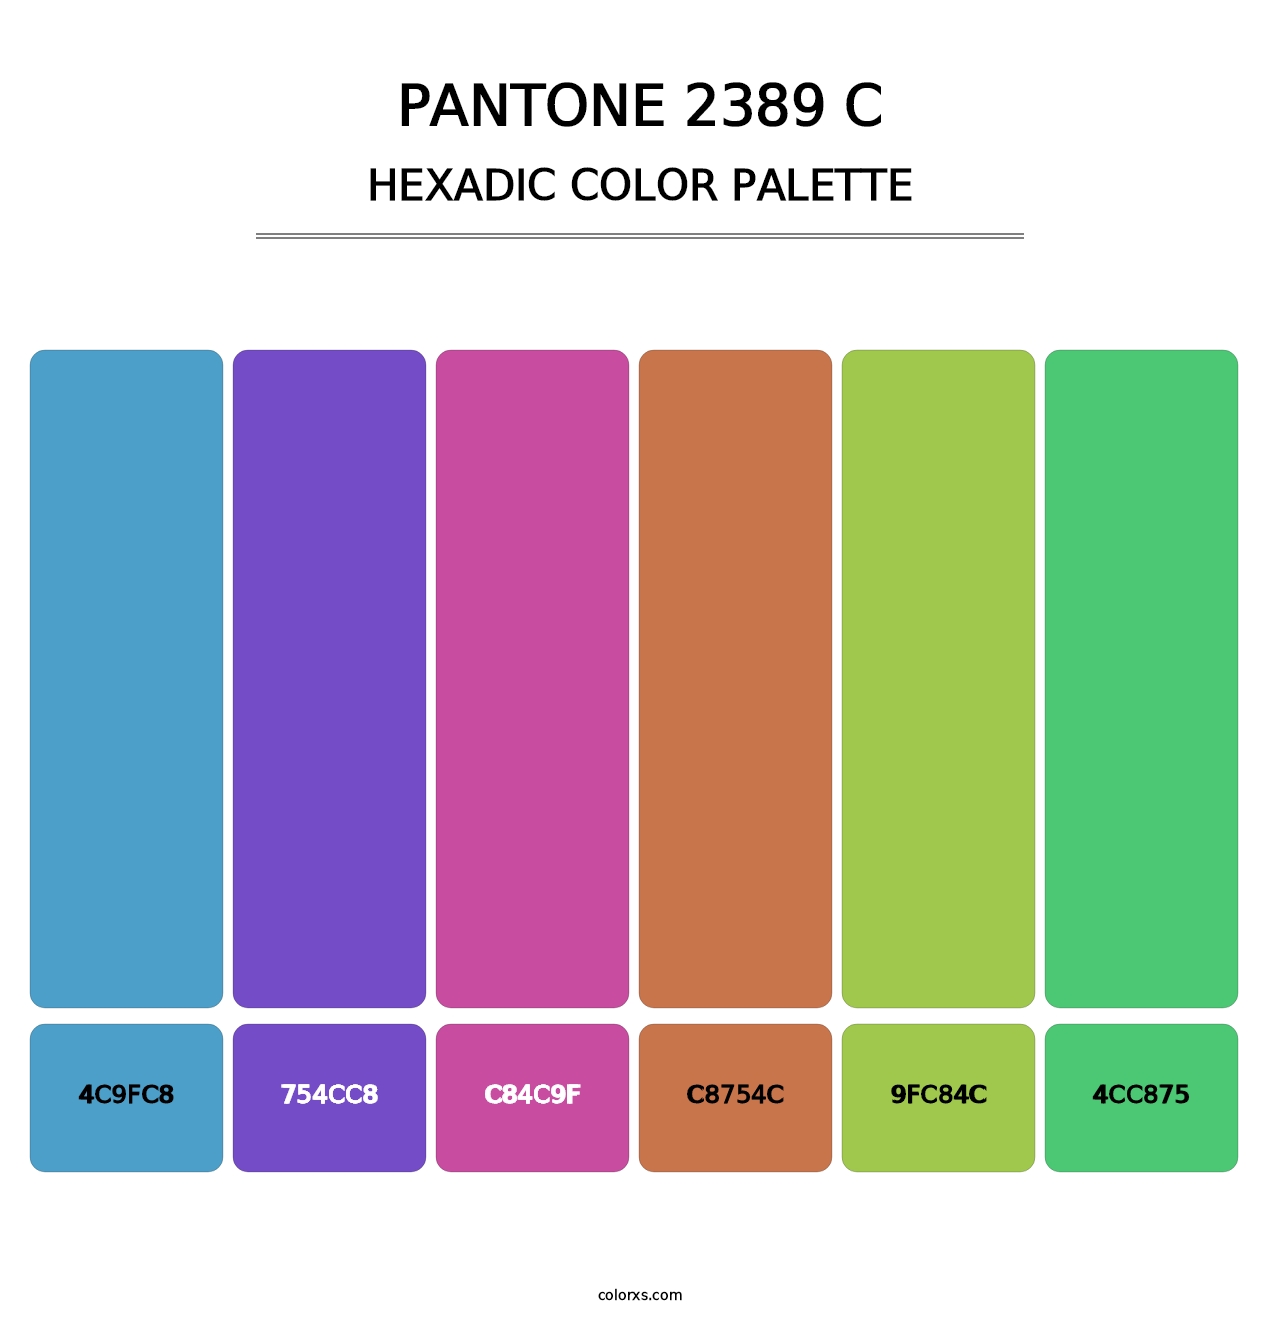 PANTONE 2389 C - Hexadic Color Palette